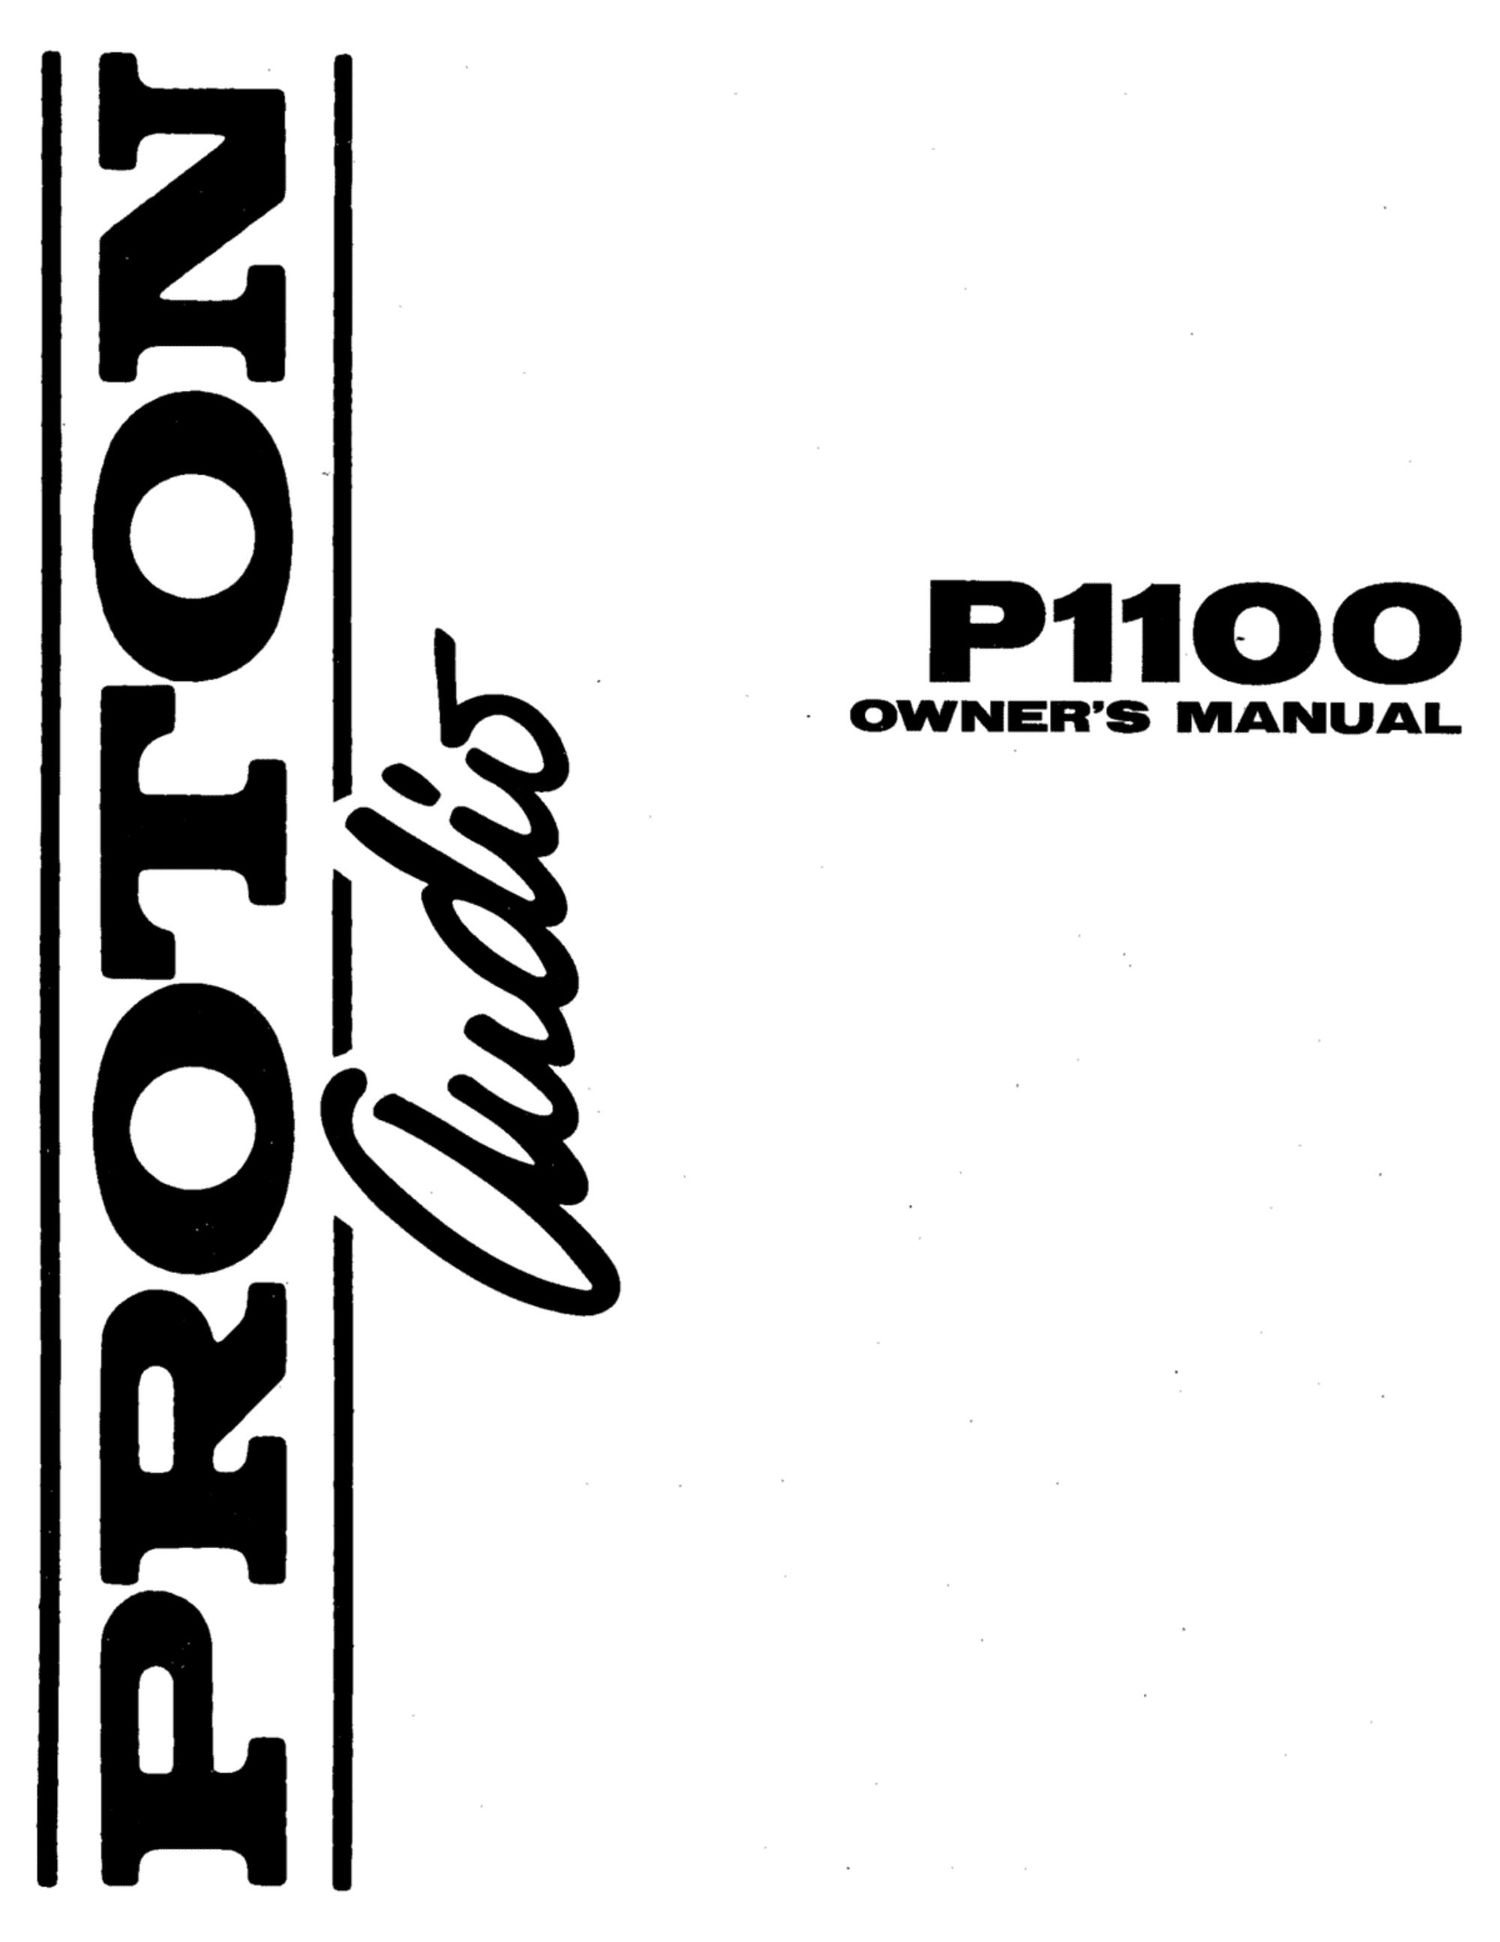 proton p 1100 owners manual alt